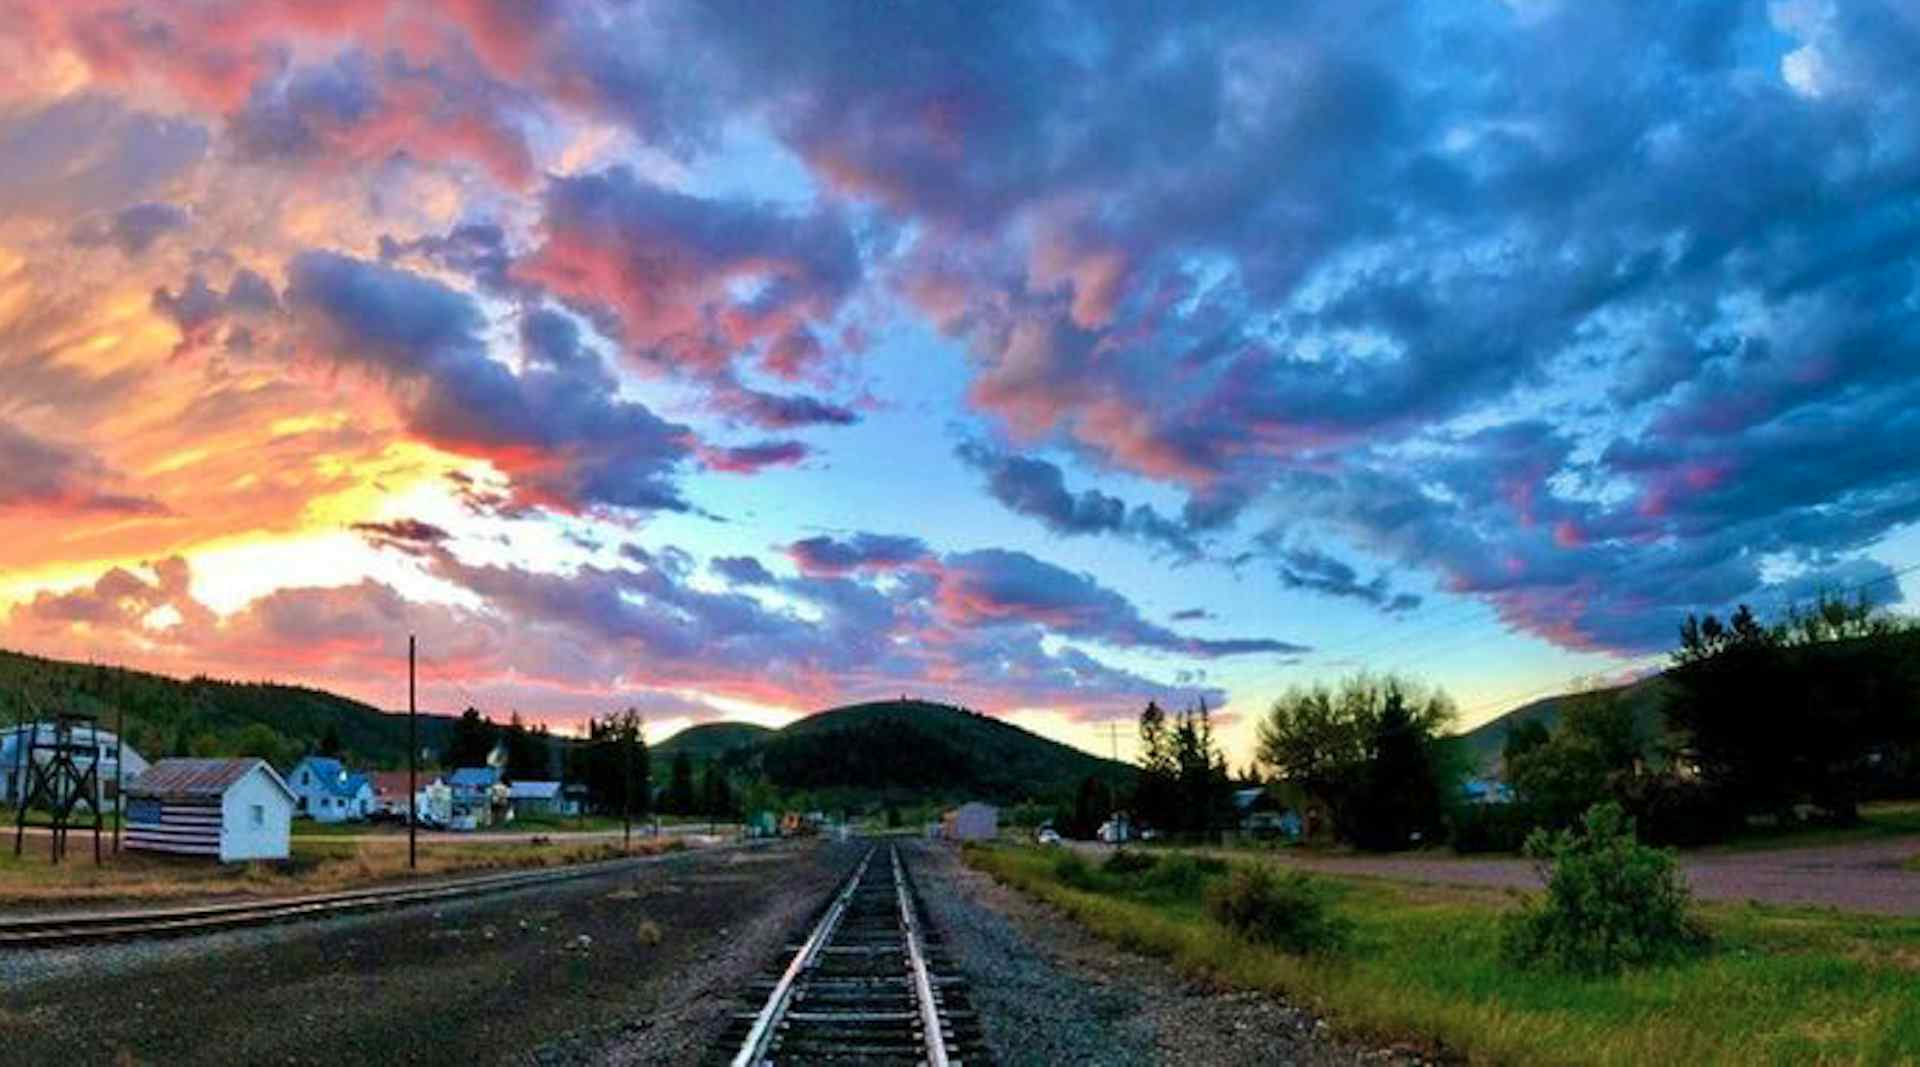 Photo by Lou Crandall Photo. Train railway to Spencer Idaho, a small town in Eastern Idaho, a part of Yellowstone Teton Territory.